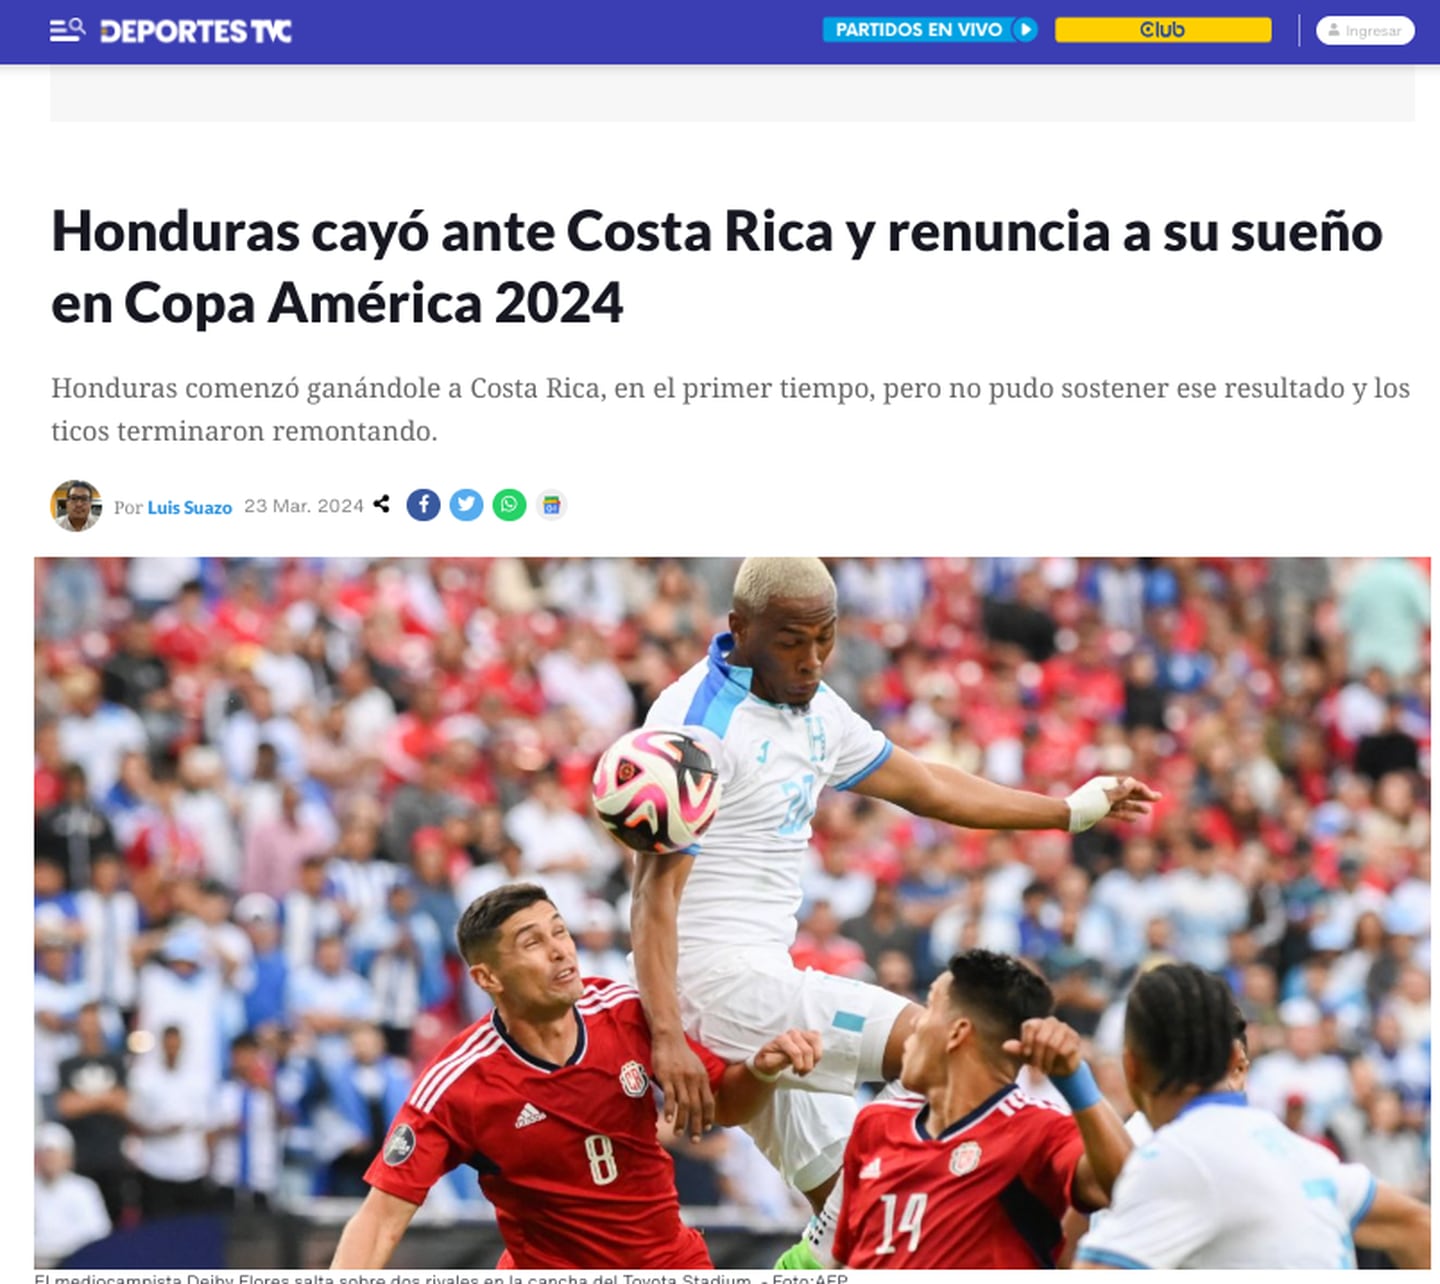 Selección Nacional de Costa Rica
Honduras
Repechaje Copa América
Deportes TVC
24 de marzo del 2024
Tomado de Facebook